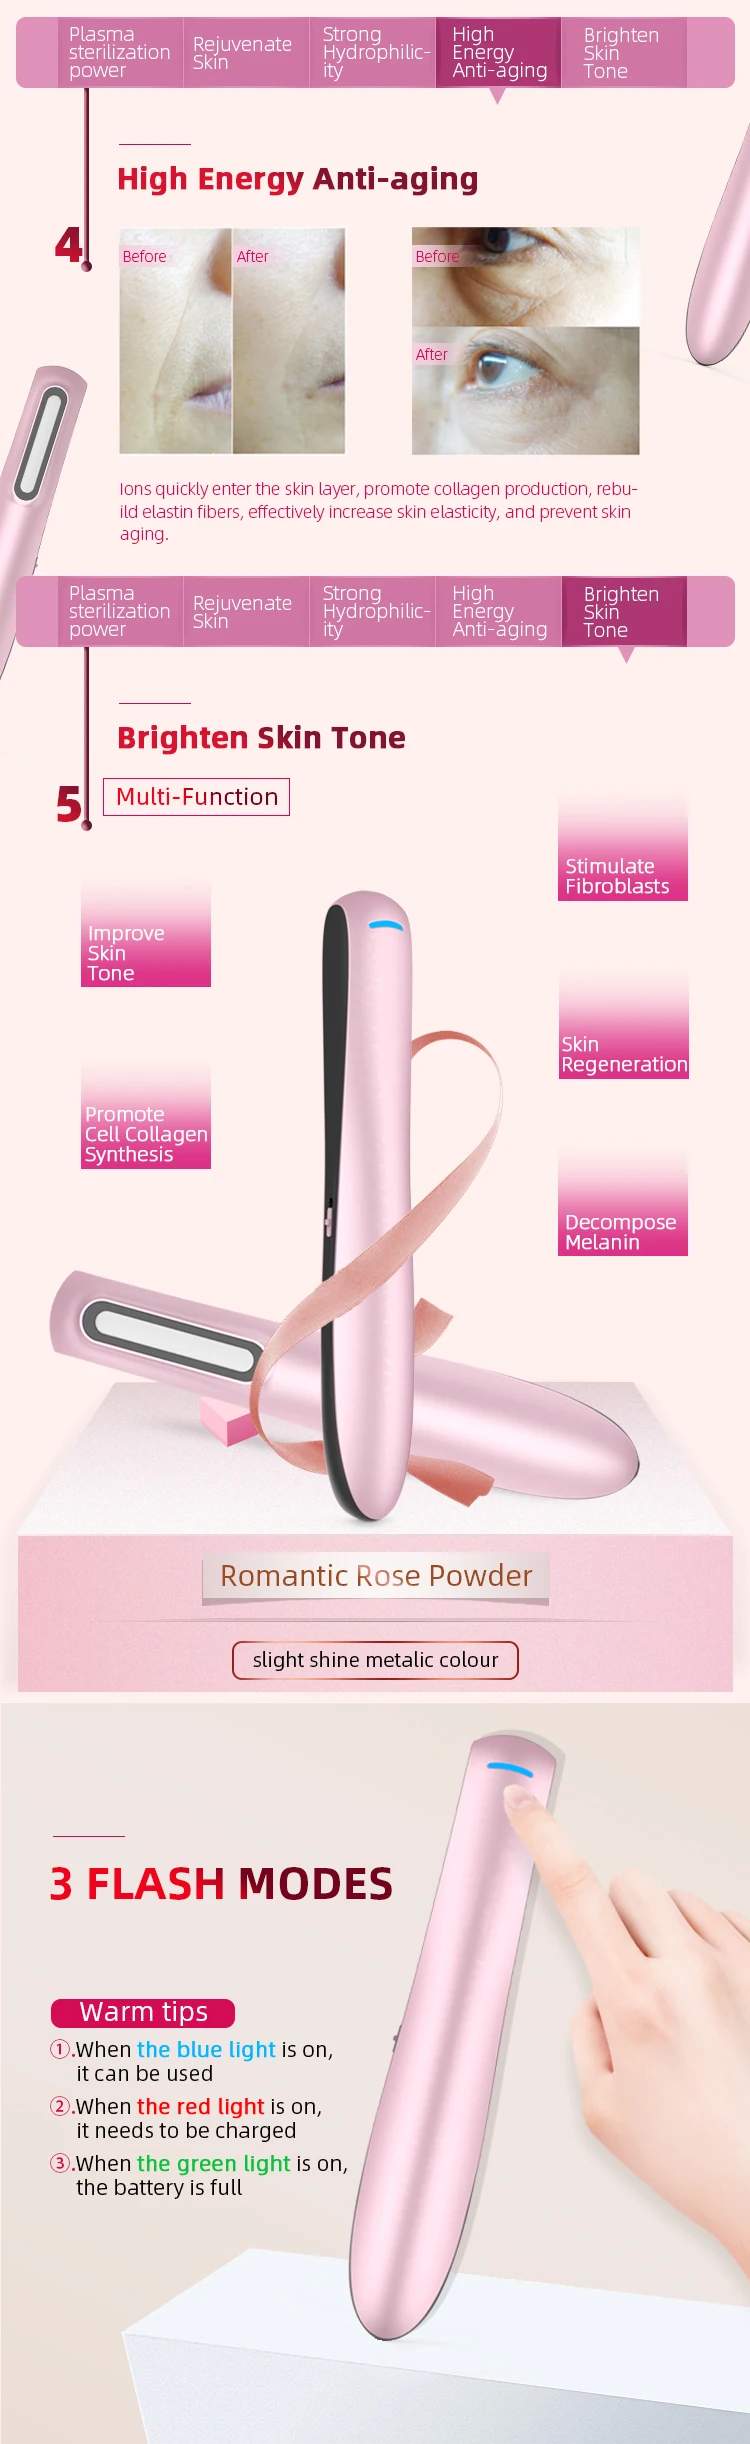 Olansi Newst Korea Sterilization Generation Skin Care Technology Plasma Pen Machine Beauty